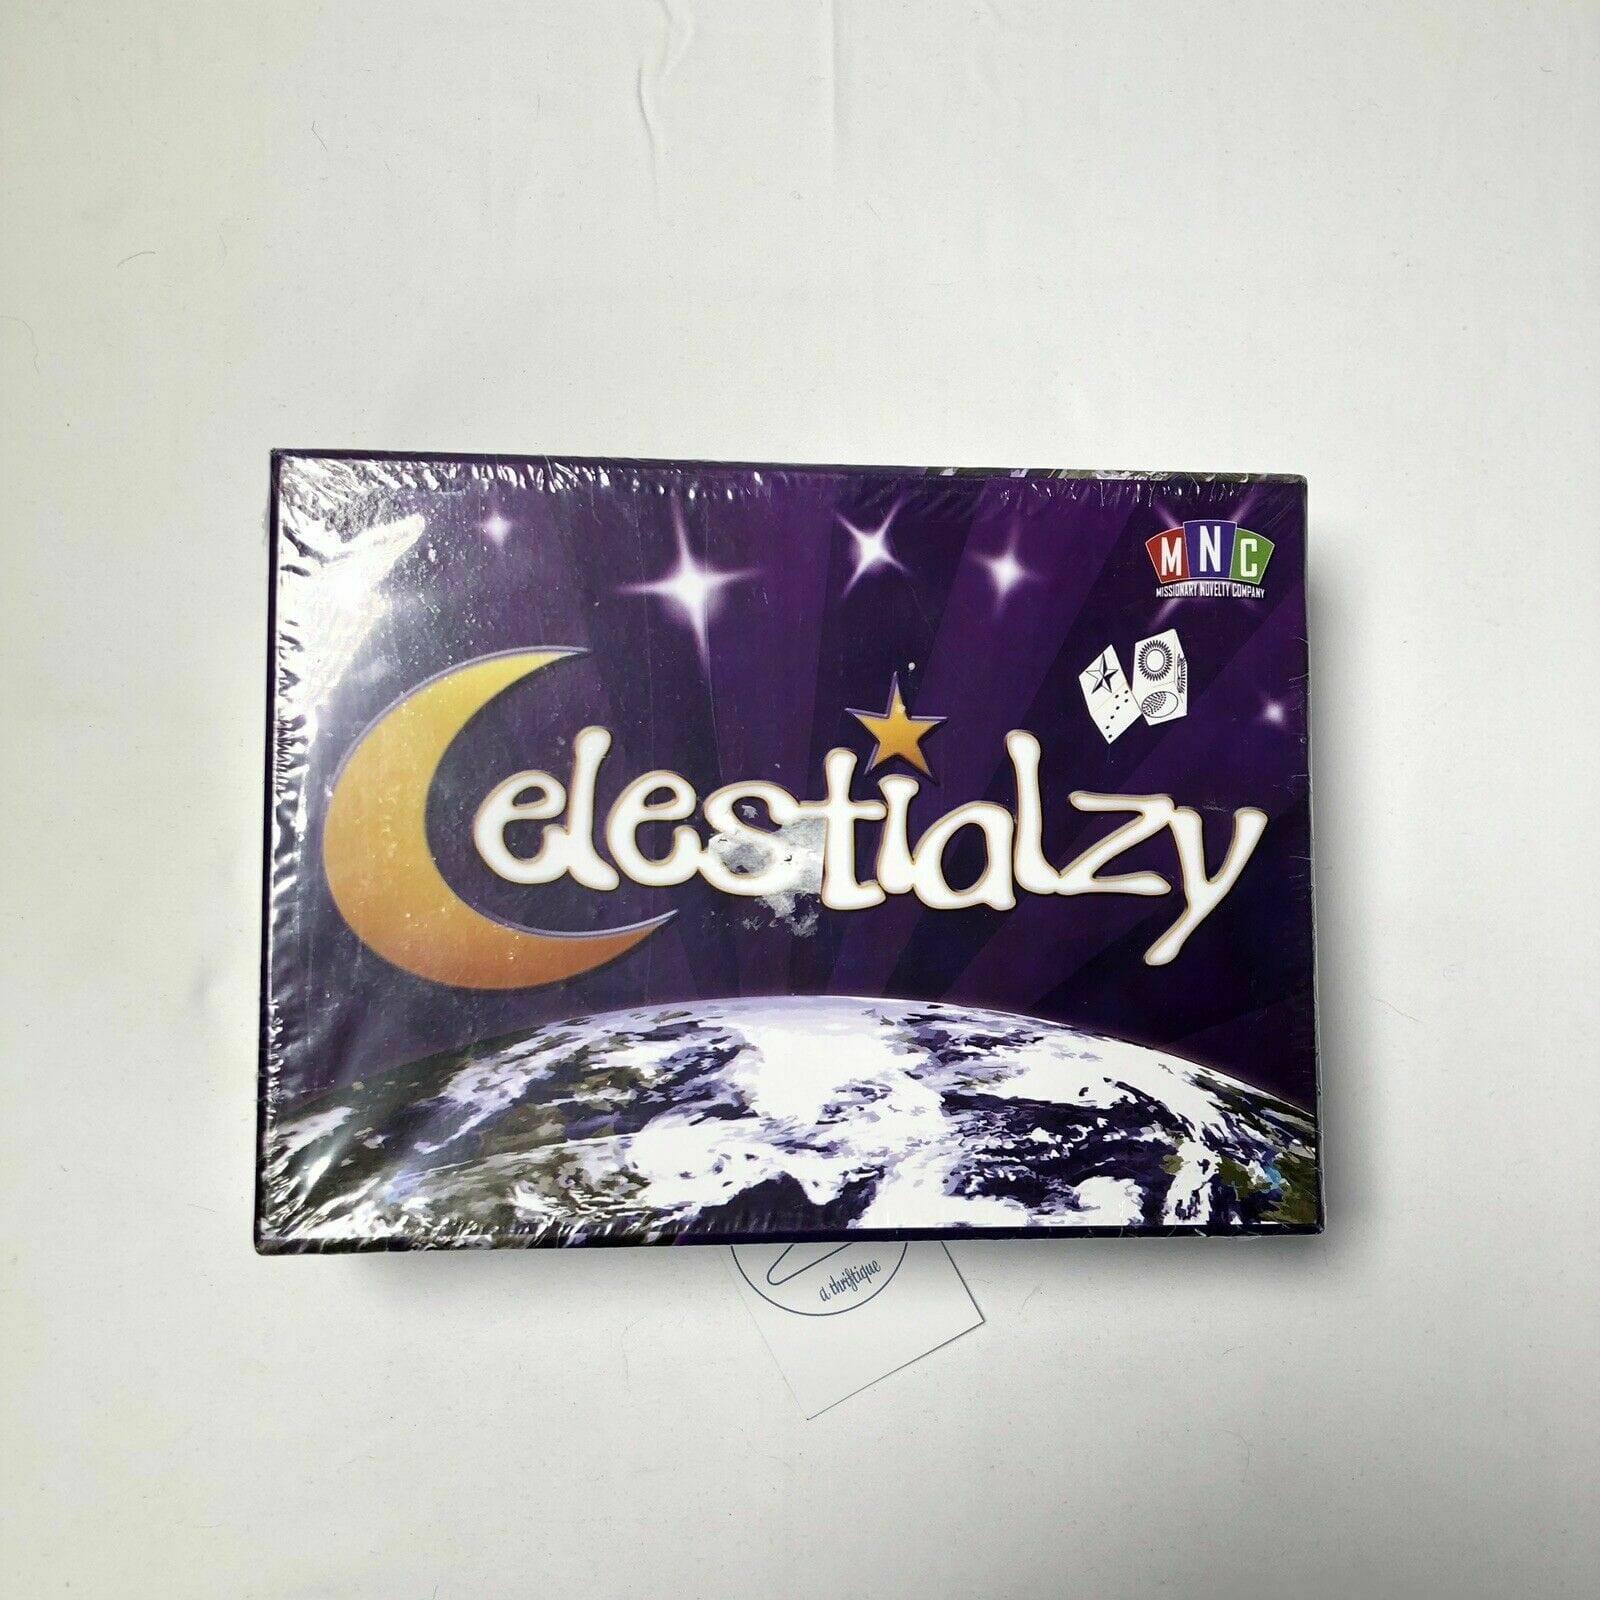 Celestialzy Roll Celestial Dice & Scoring the Highest Score New 🎁 - parsimonyshoppes